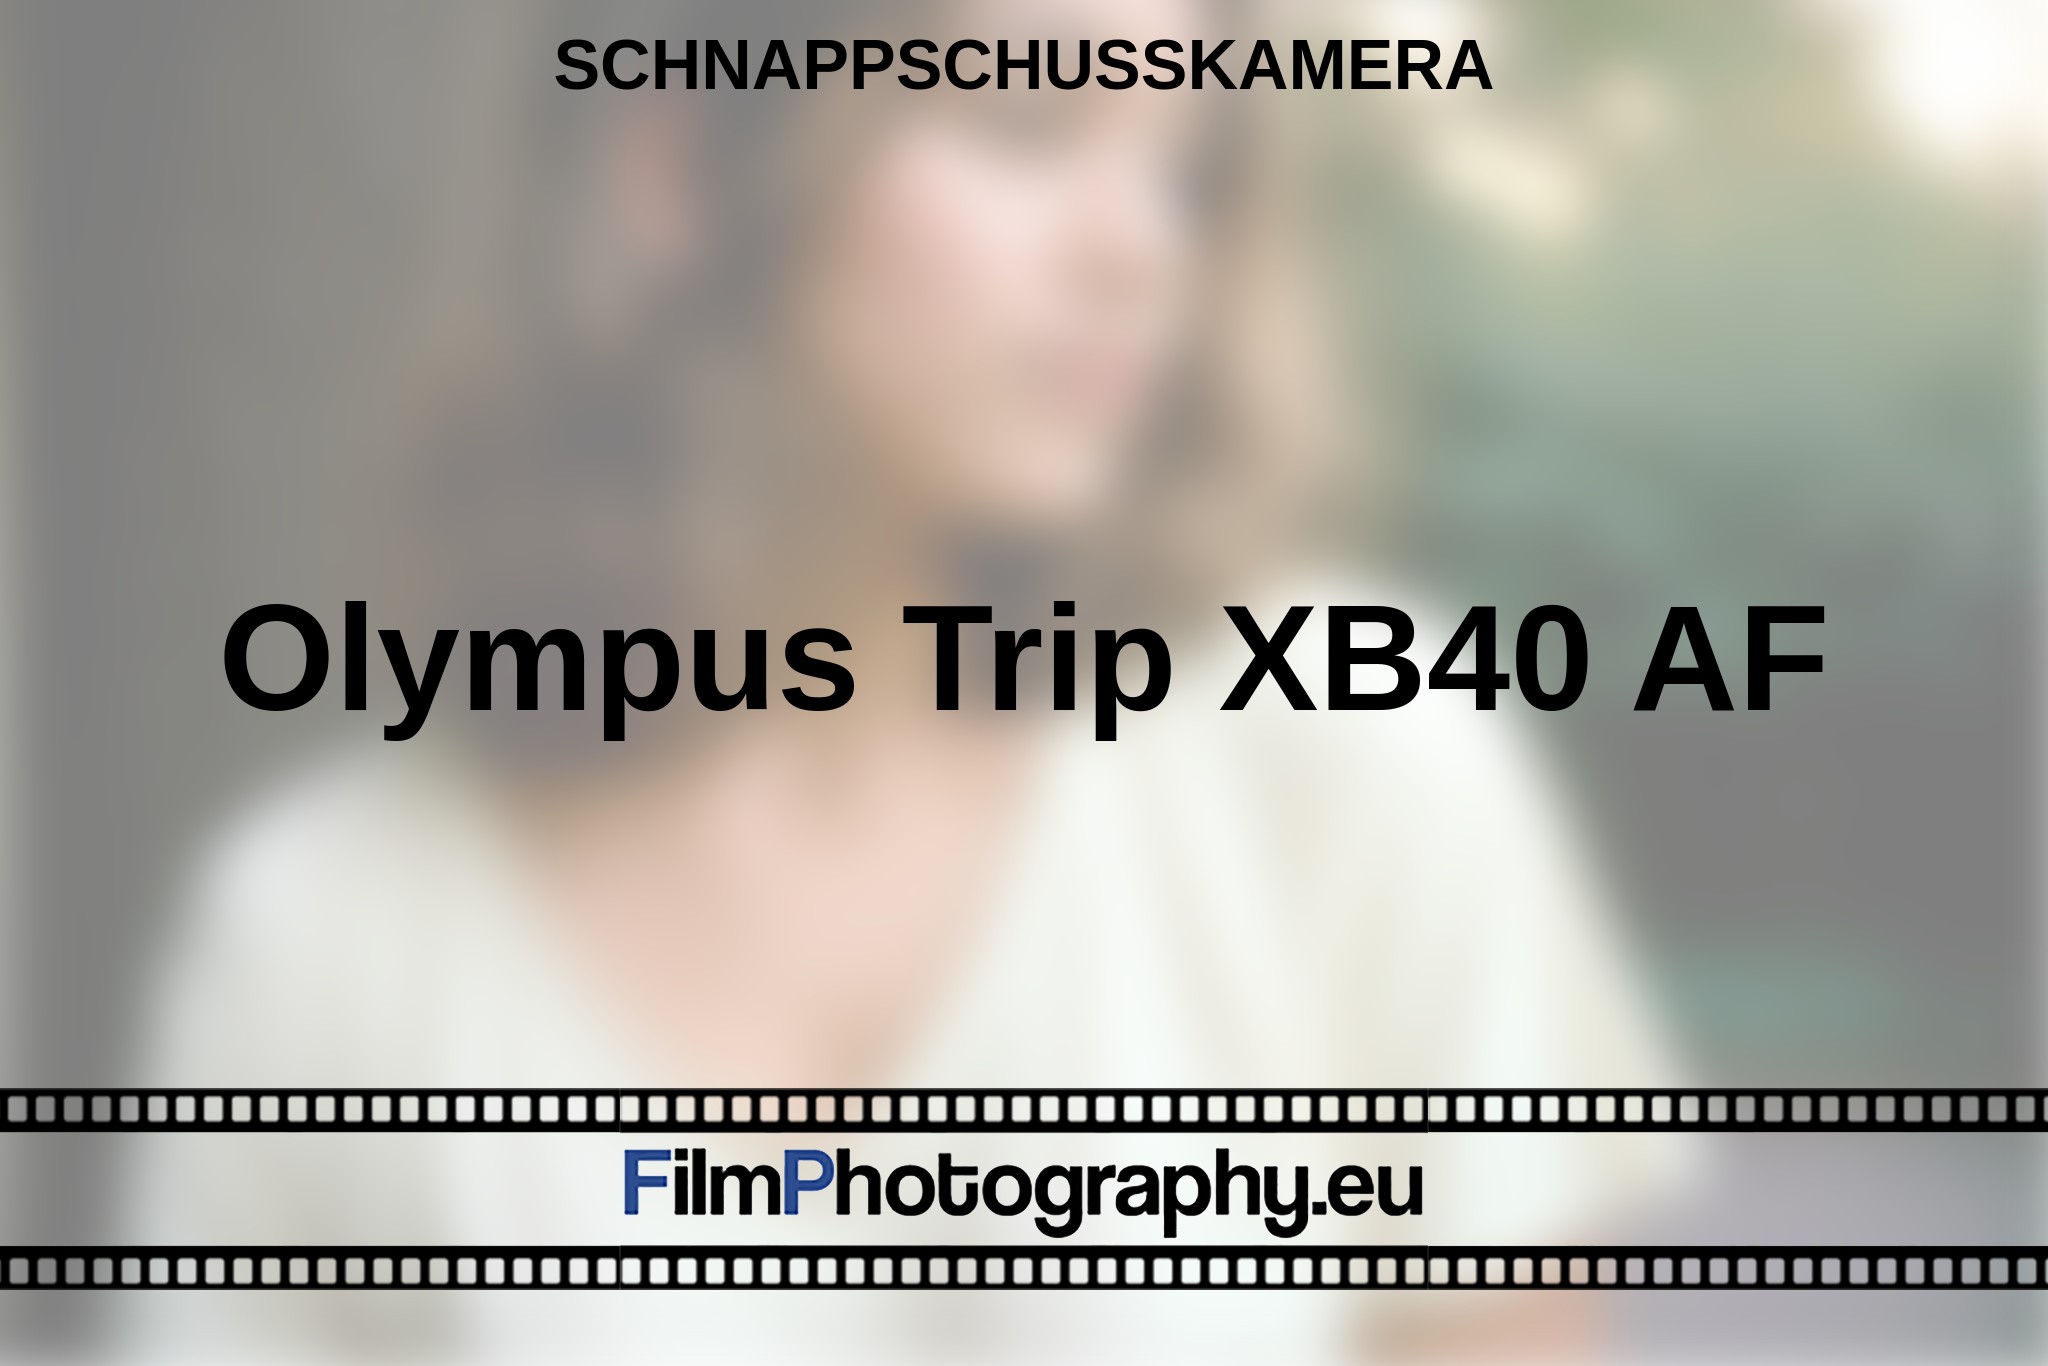 olympus-trip-xb40-af-schnappschusskamera-bnv.jpg